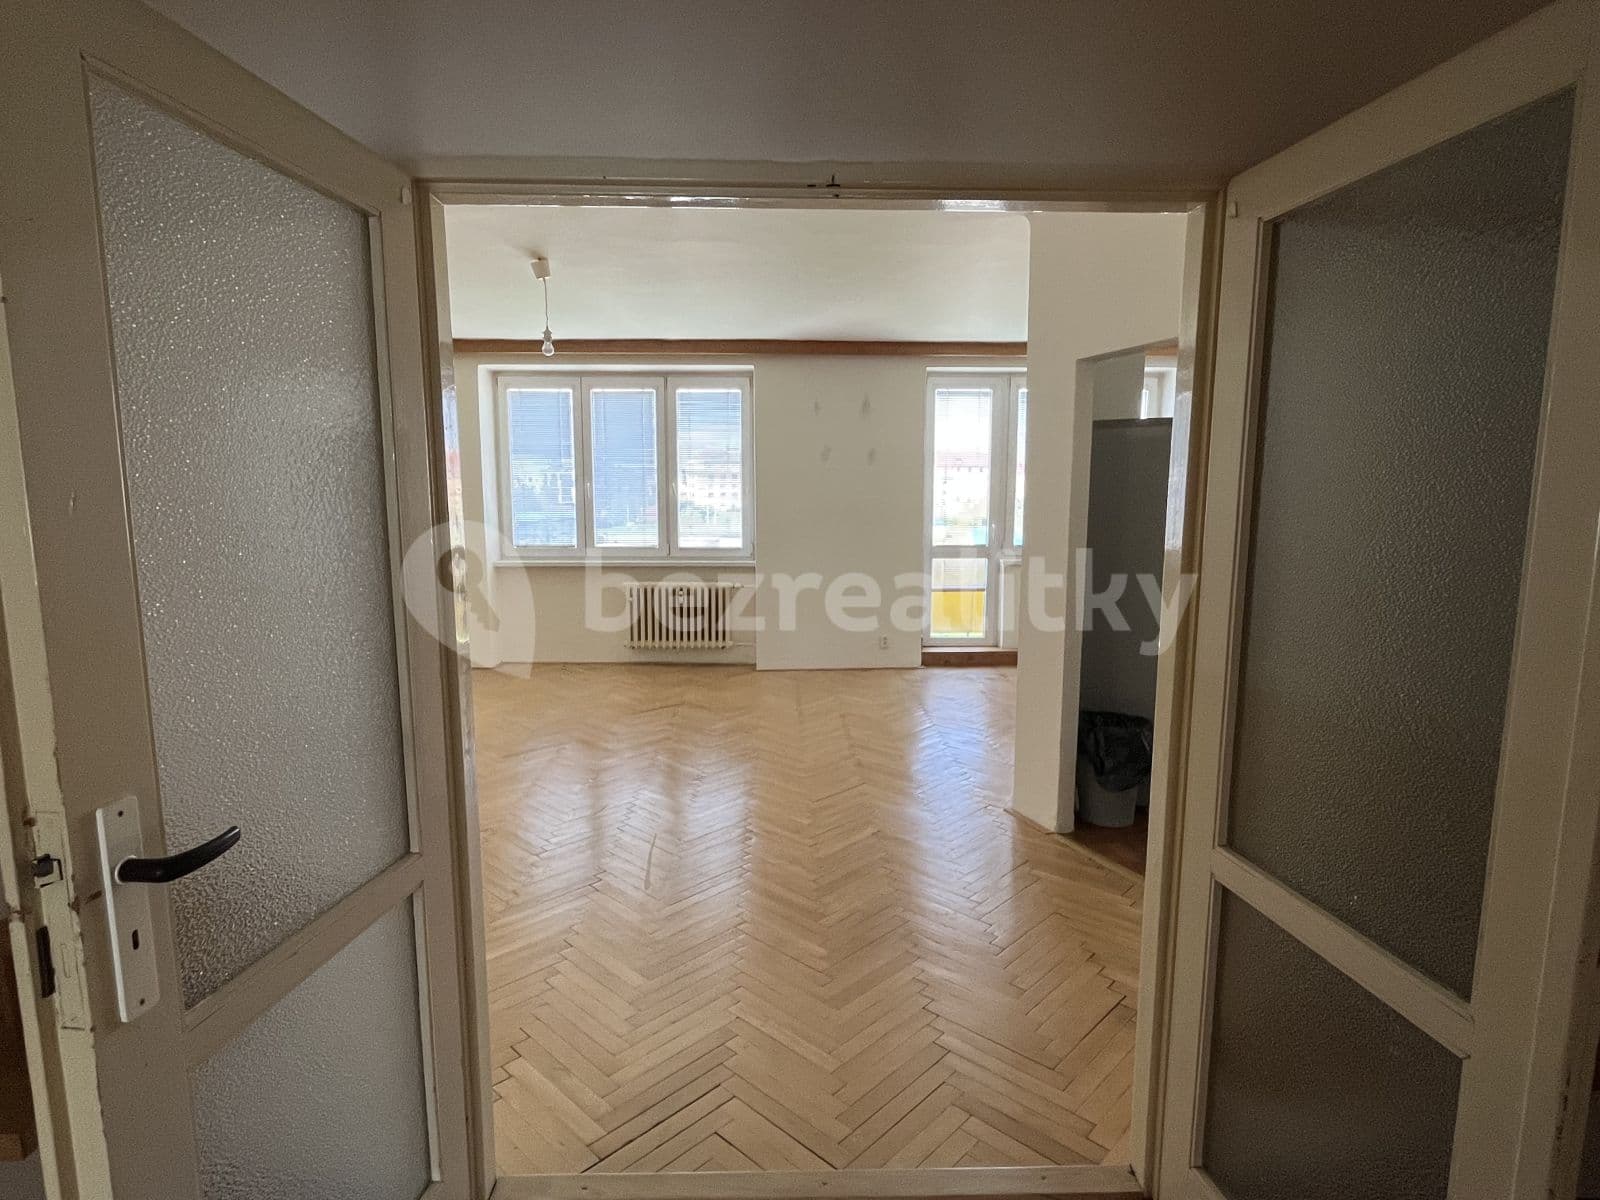 2 bedroom with open-plan kitchen flat to rent, 88 m², Hradecká, Prague, Prague